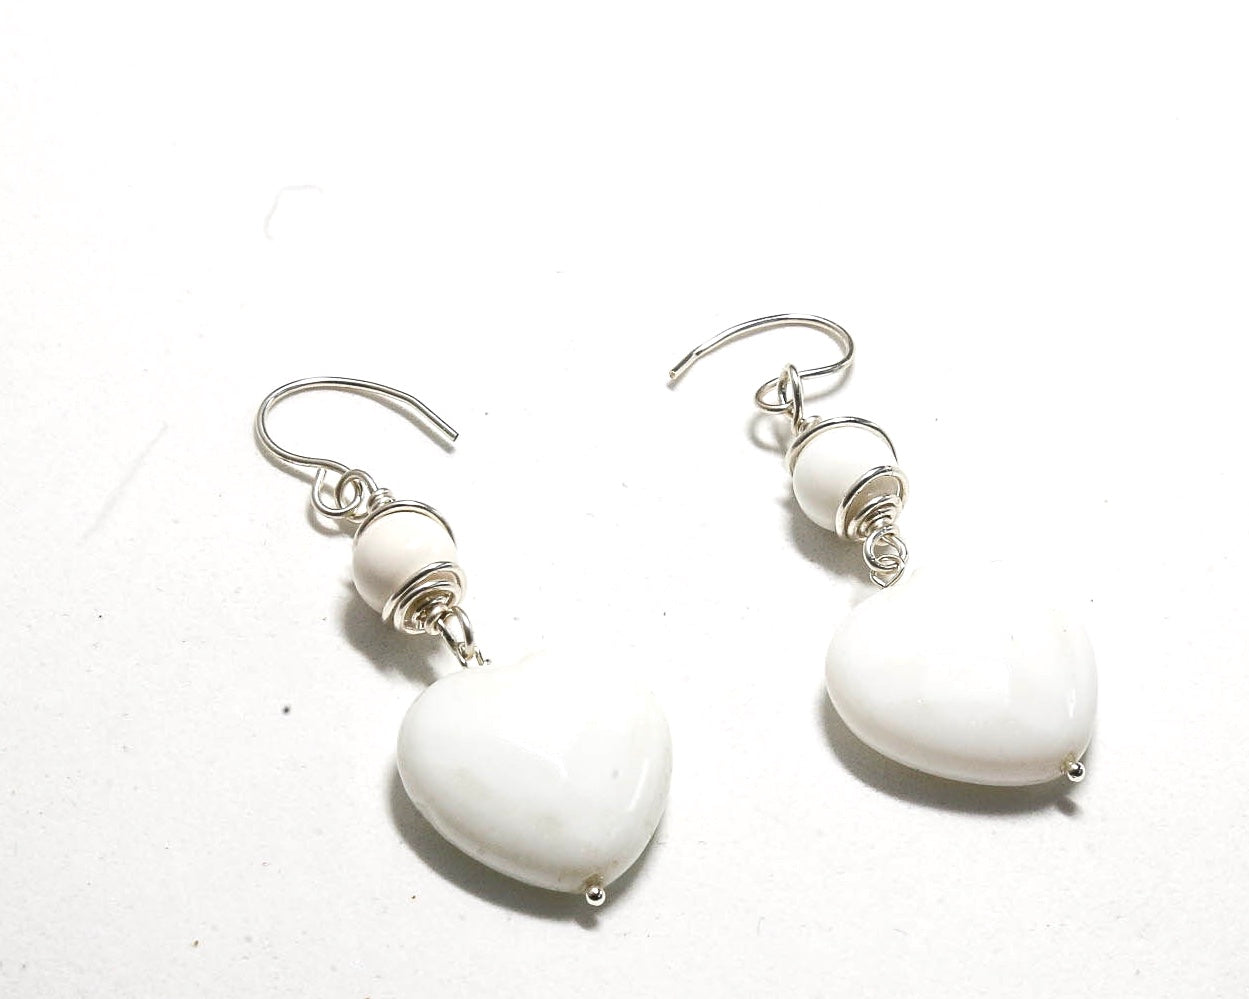 White Onyx Heart Earrings with sterling silver ear wire.